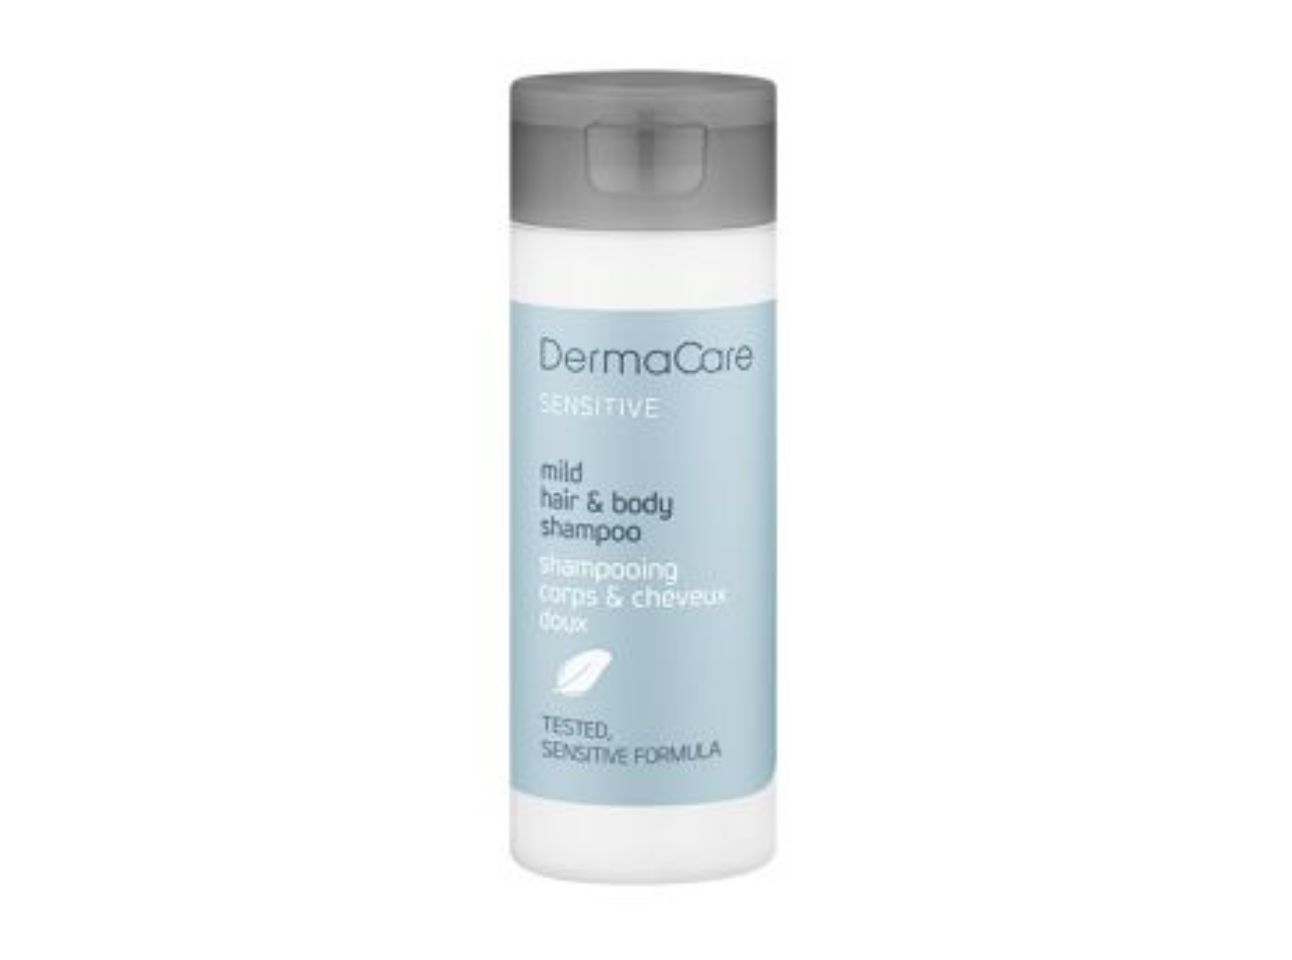 DermaCare SENSITIVE - Haar- und Körperseife, 30 ml